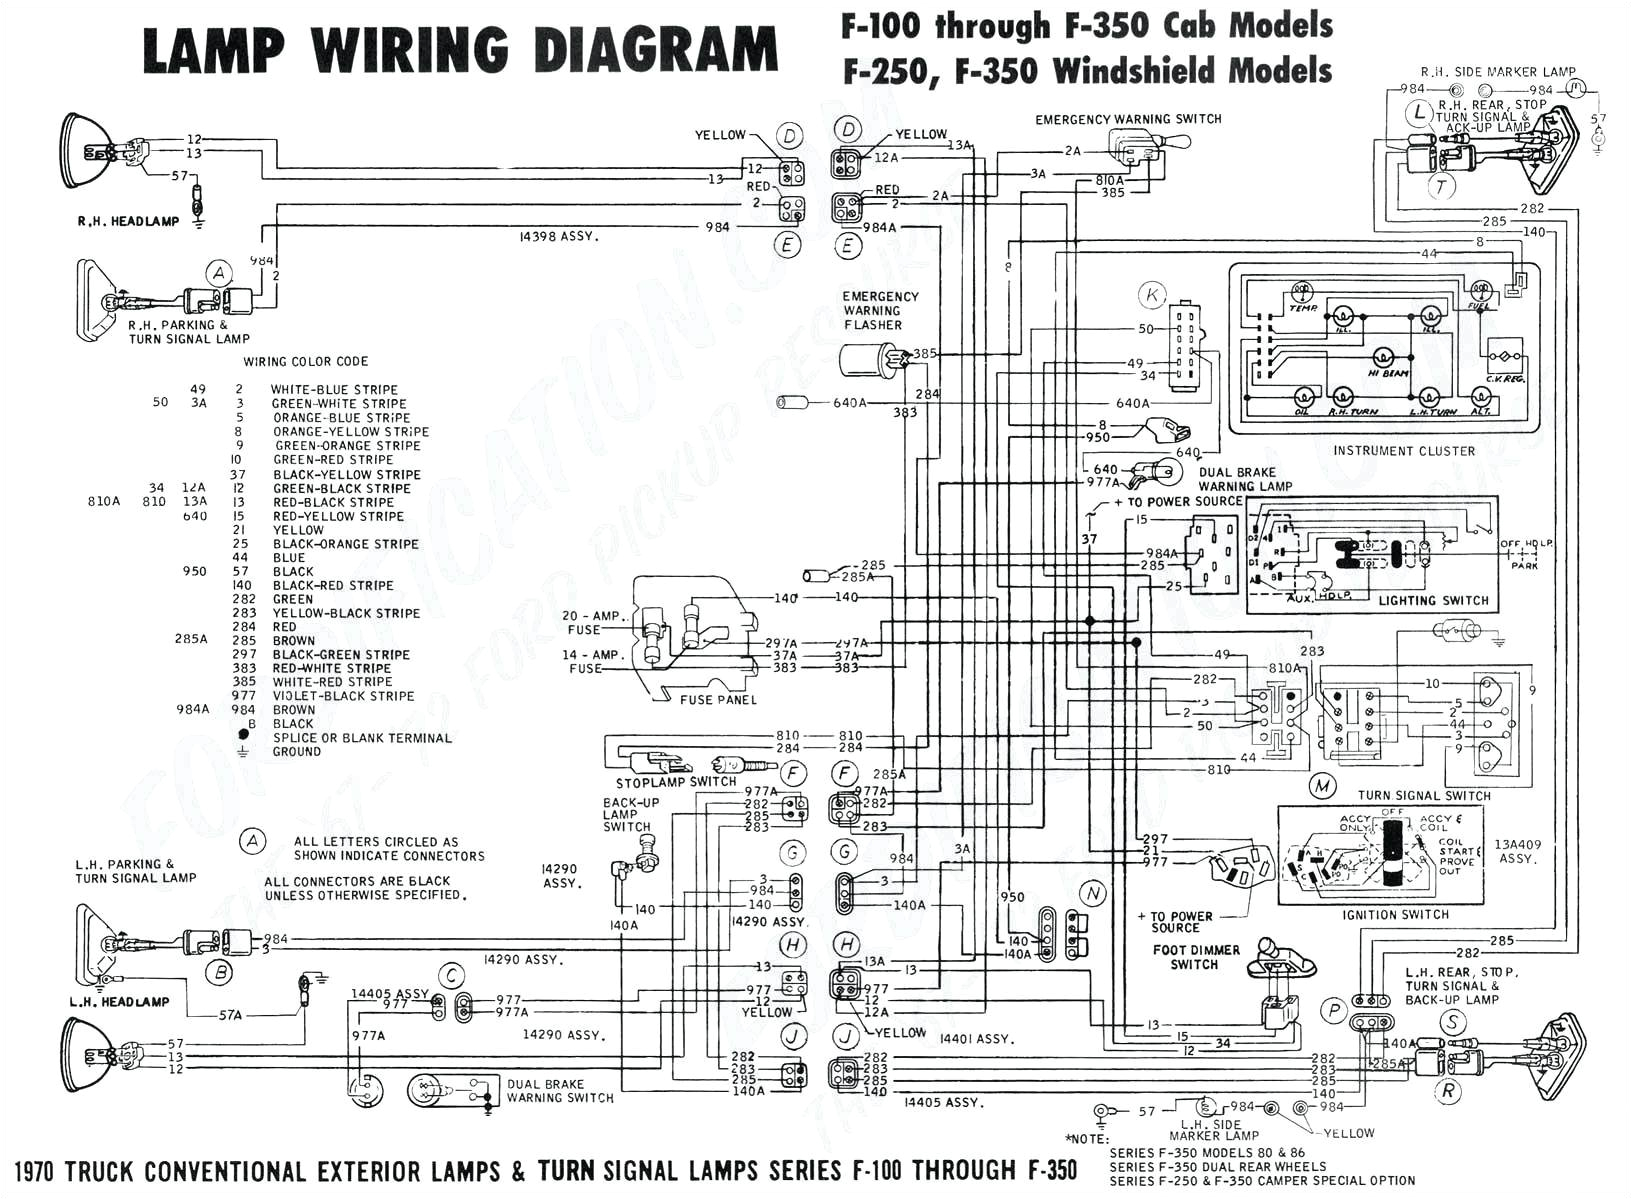 1968 camaro rear harness diagram manual e book